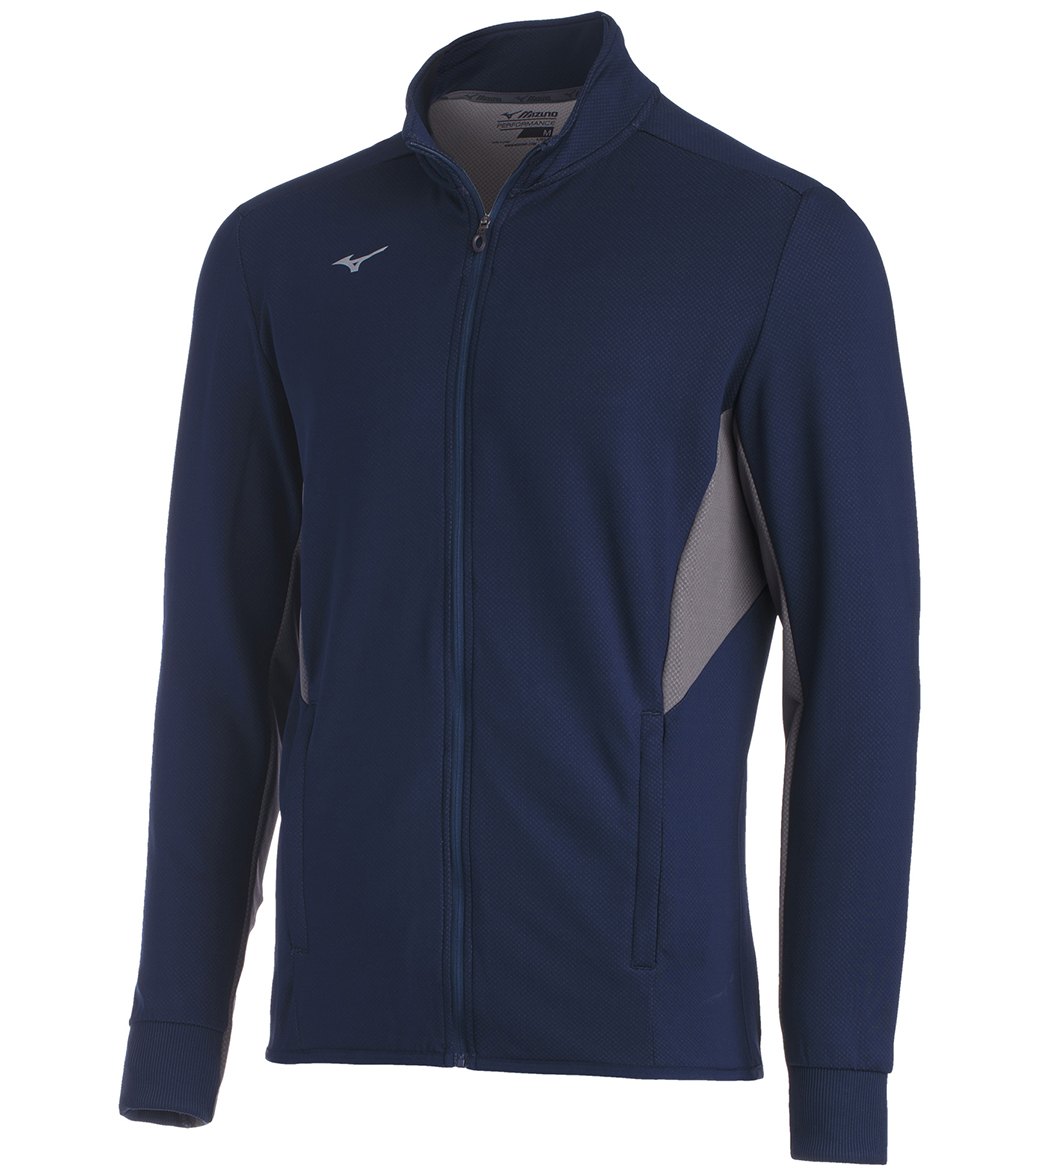 Mizuno Men's Elite Training Jacket - Navy-Grey Medium Navy/Grey Cotton/Polyester - Swimoutlet.com